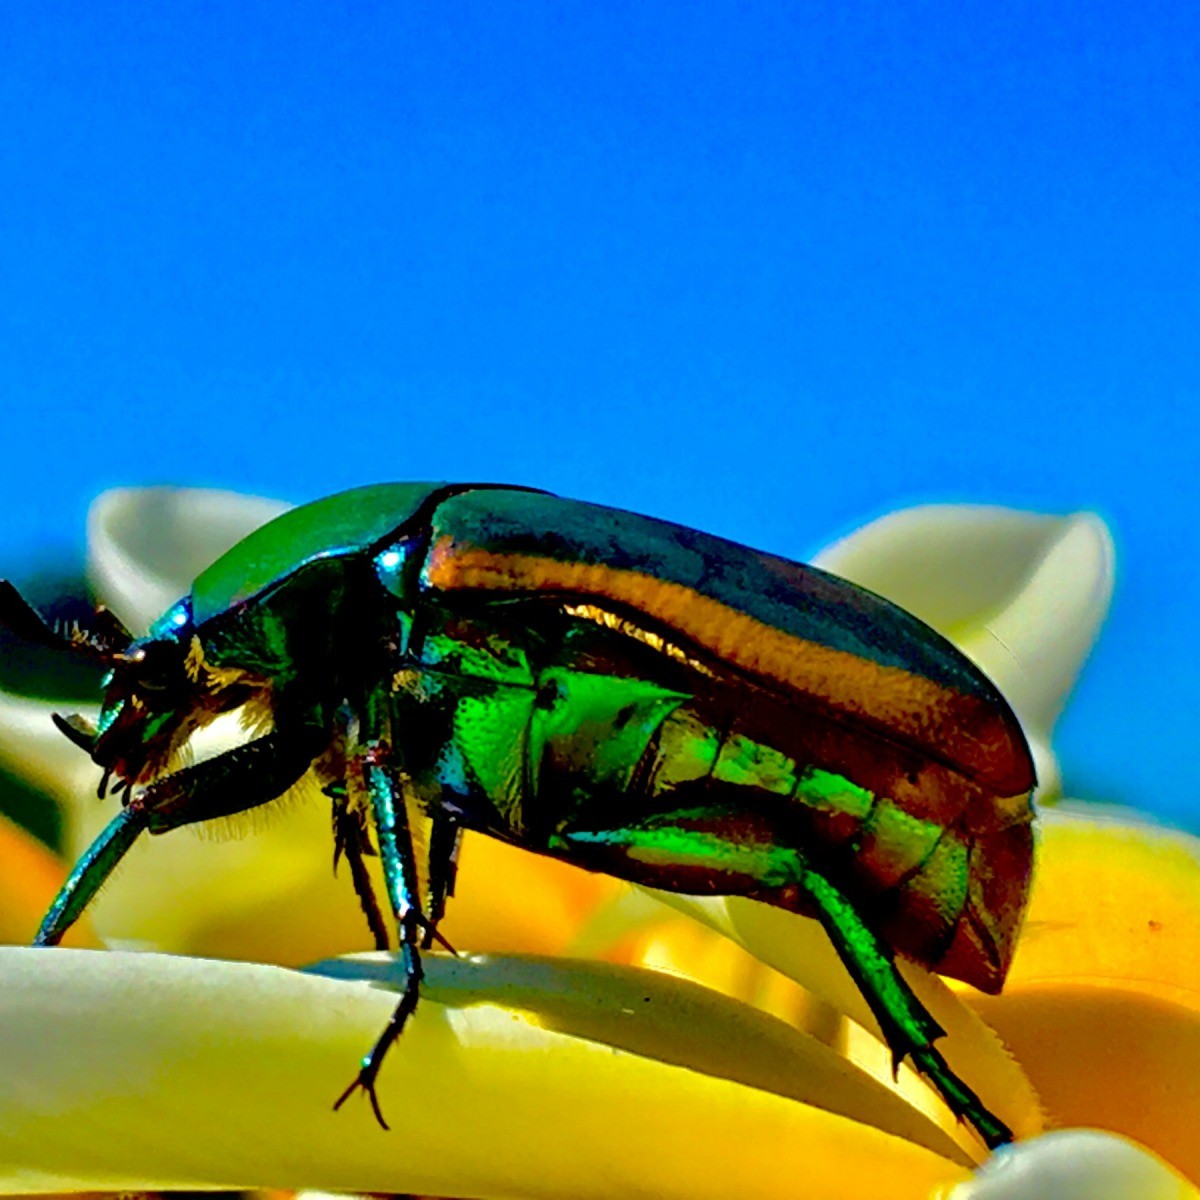 Green June Bug (Cotinis nitida) Photos ThriftyFun